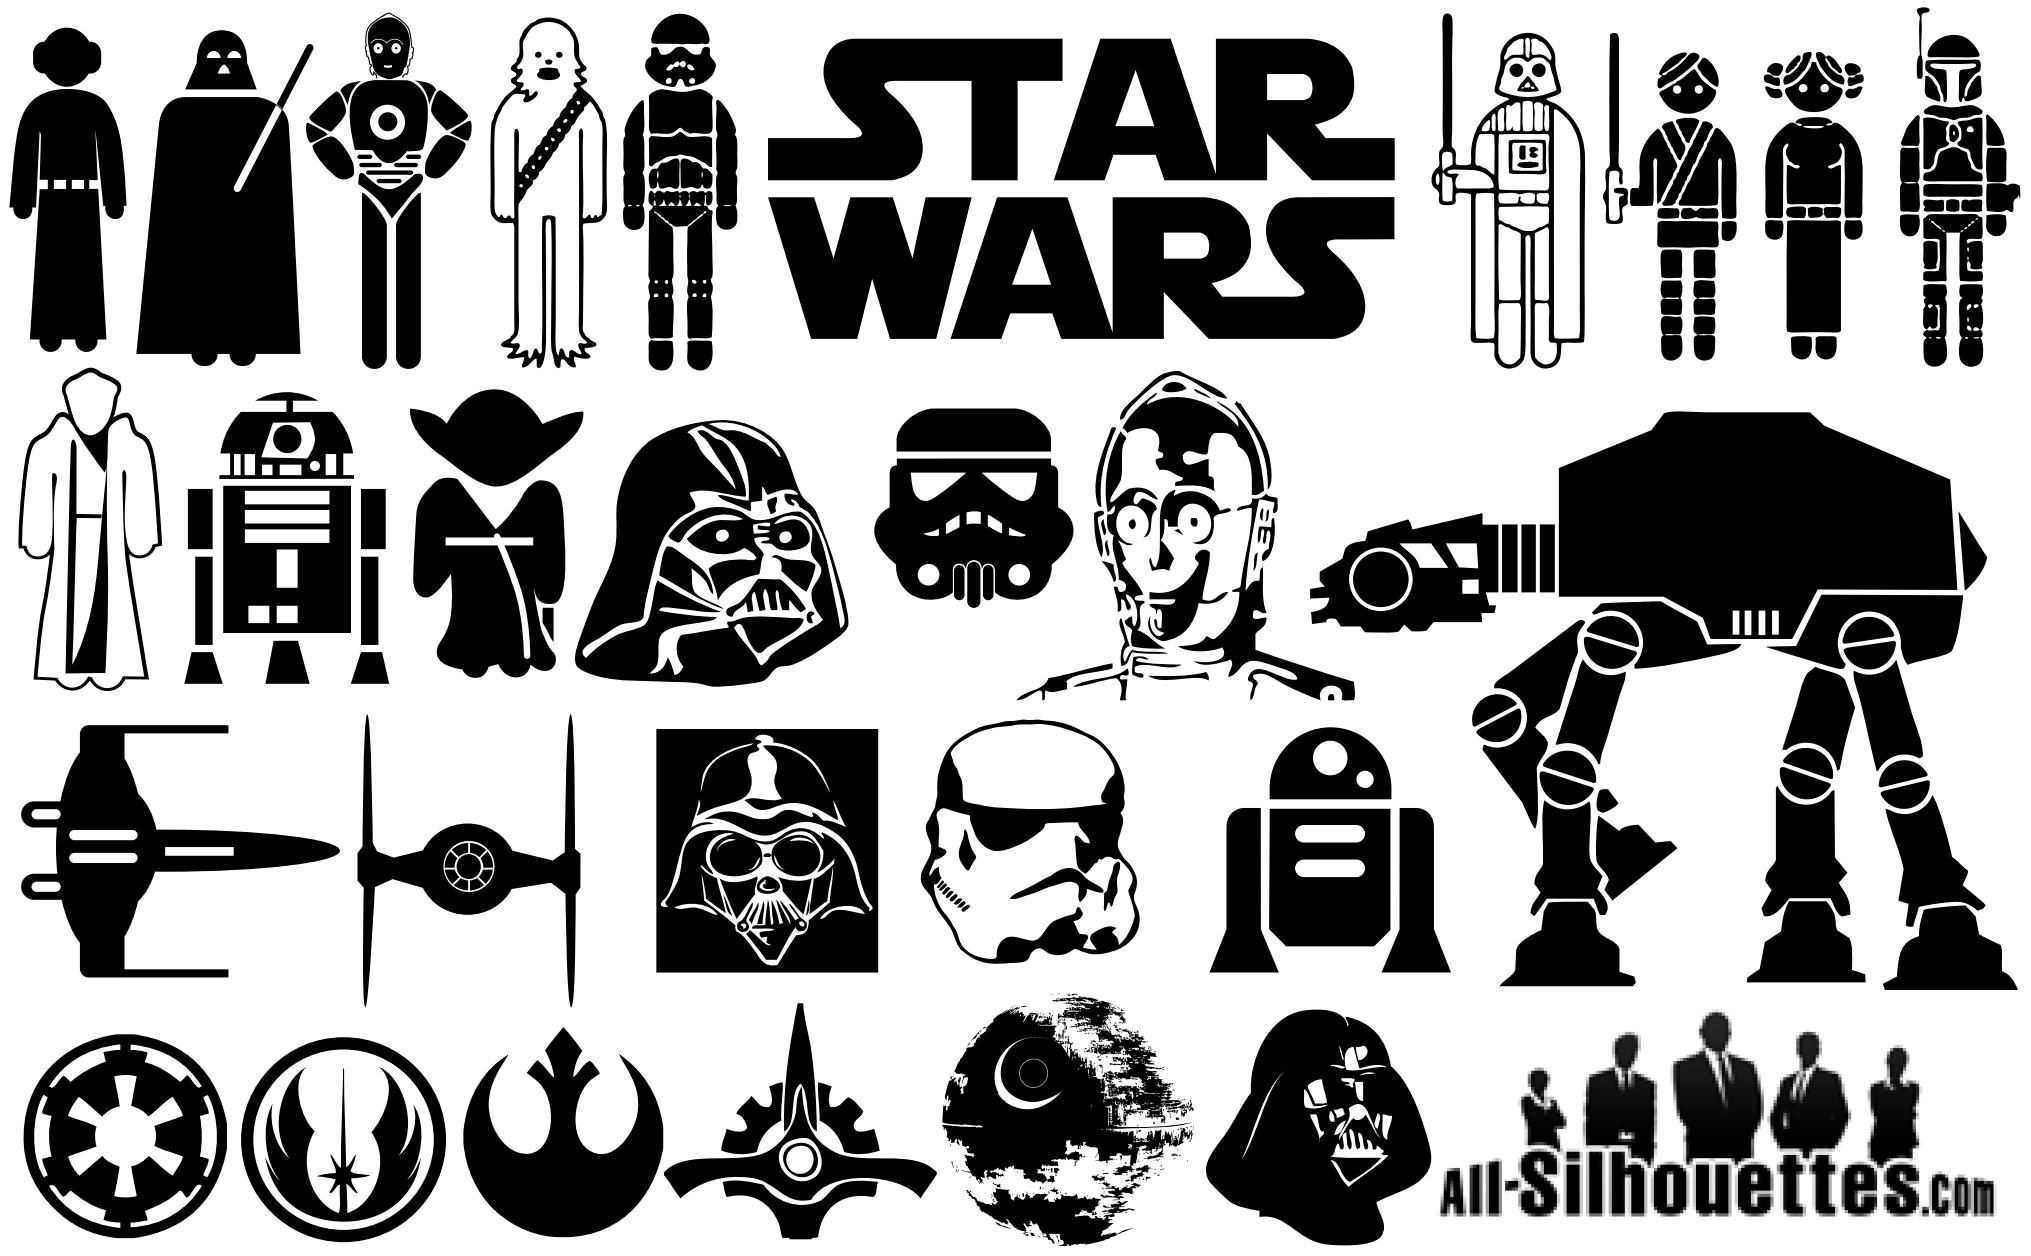 Http Www Freelogovectors Net Wp Content Uploads 2013 12 Star Wars Symbol Silhouettes Jpg Star Wars Silhouette Star Wars Symbols Star Wars Stencil